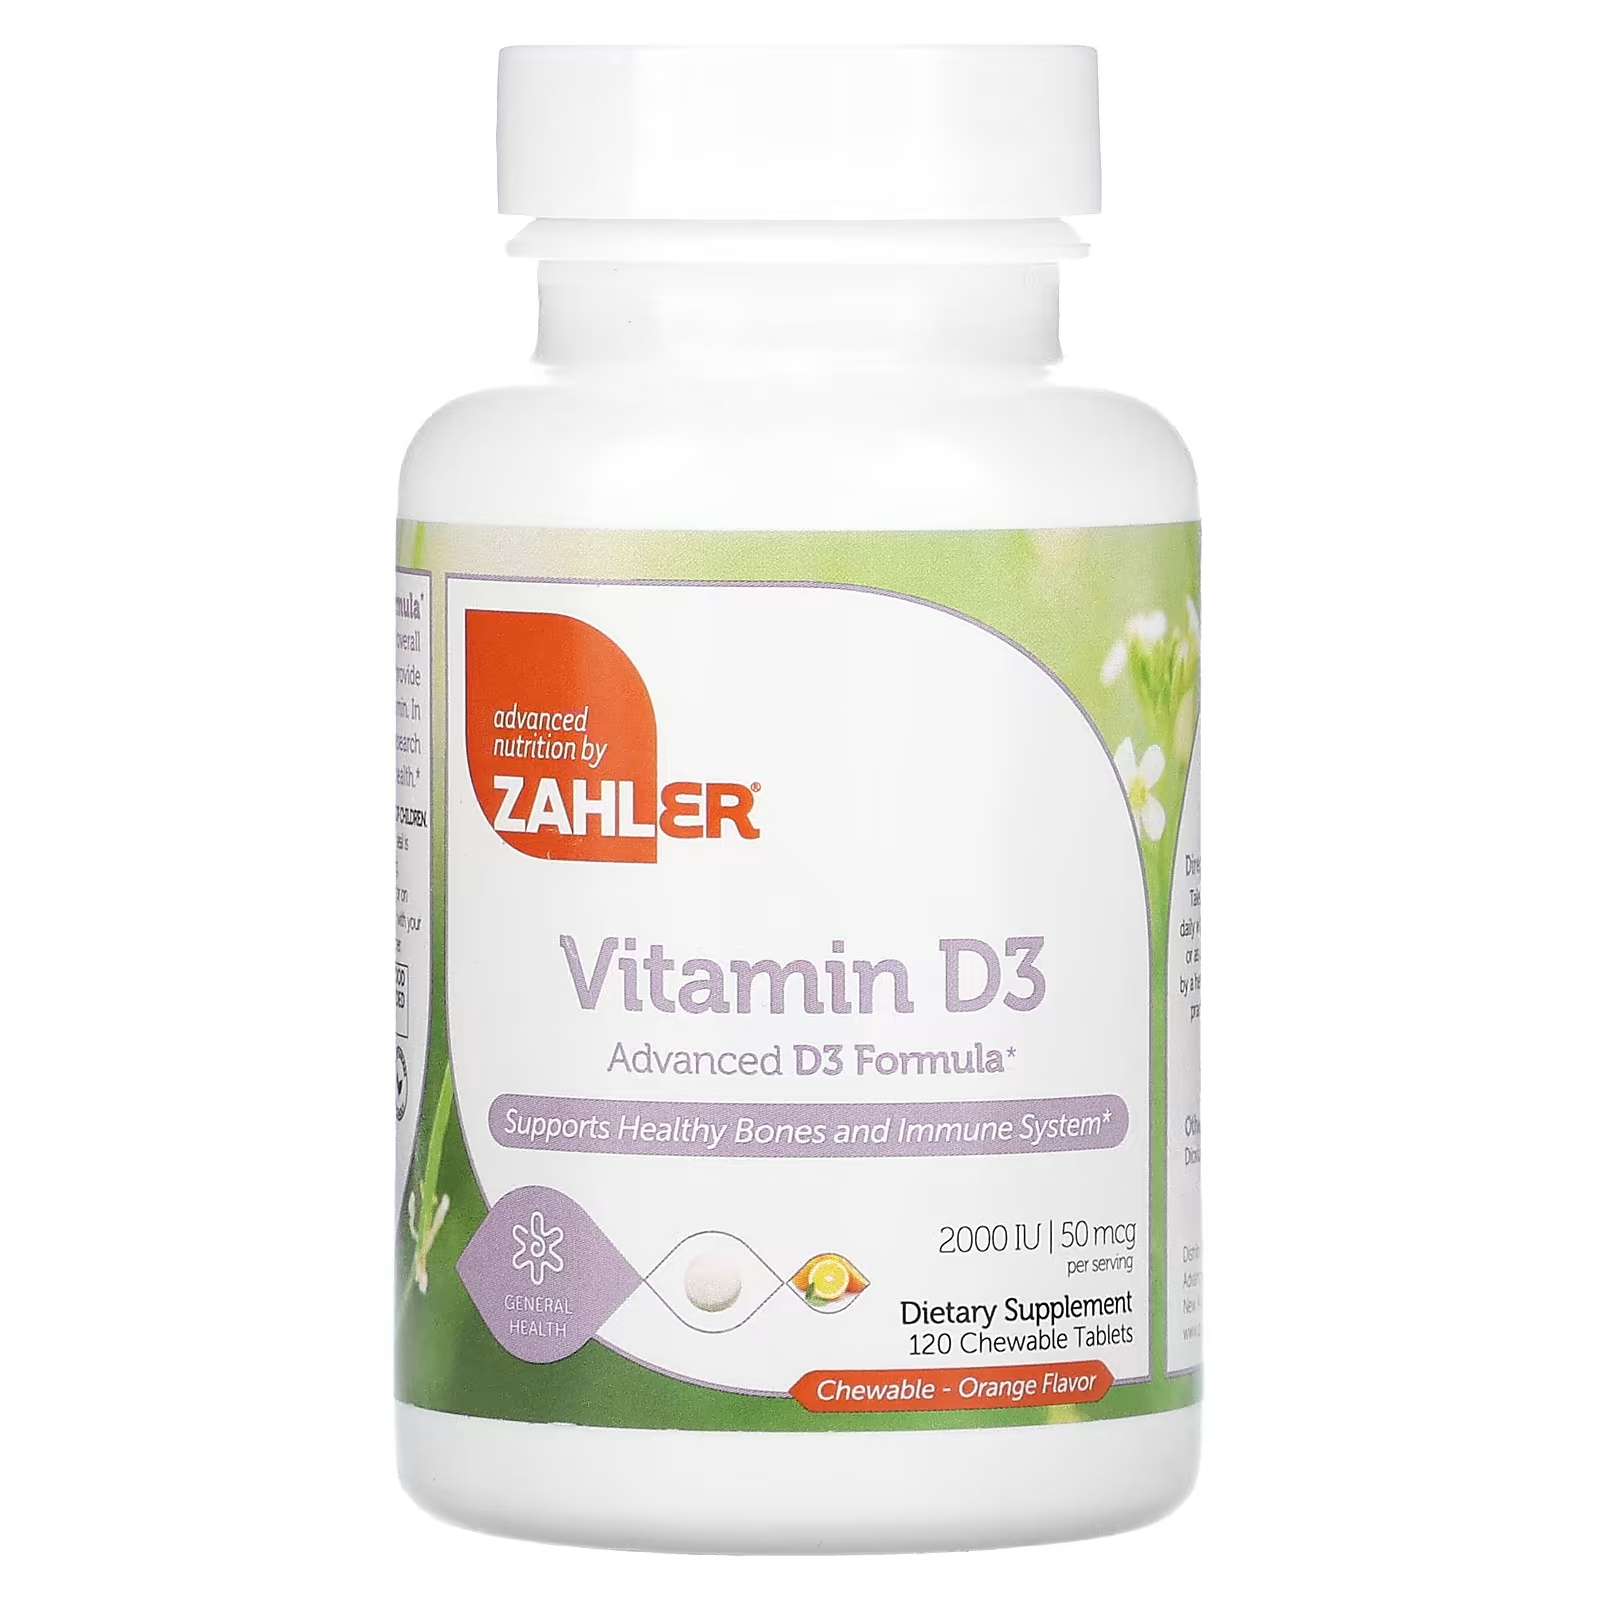 Витамин D3 Zahler апельсин 50 мкг 2000 МЕ, 120 таблеток витамин d3 zahler junior 25 мкг 1000 ме 120 жевательных таблеток